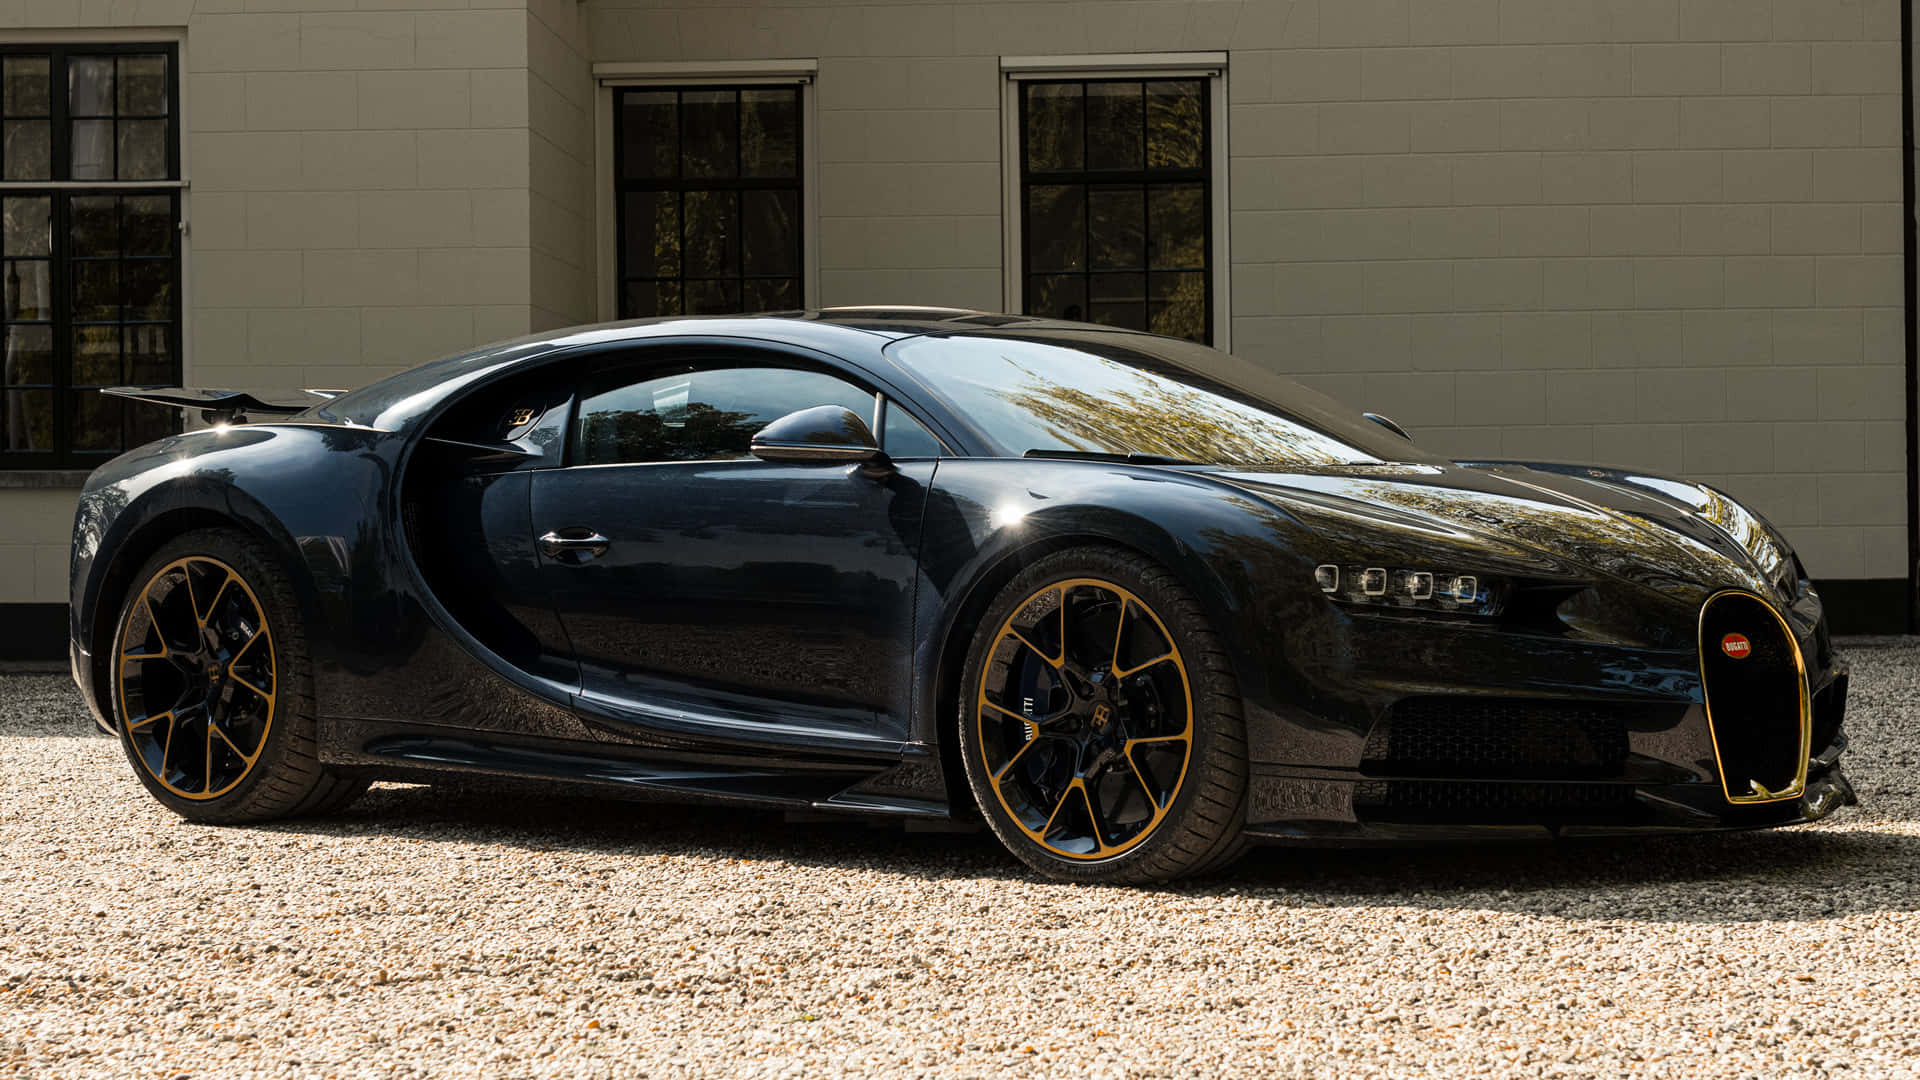 Stunning Bugatti Chiron on Display Wallpaper